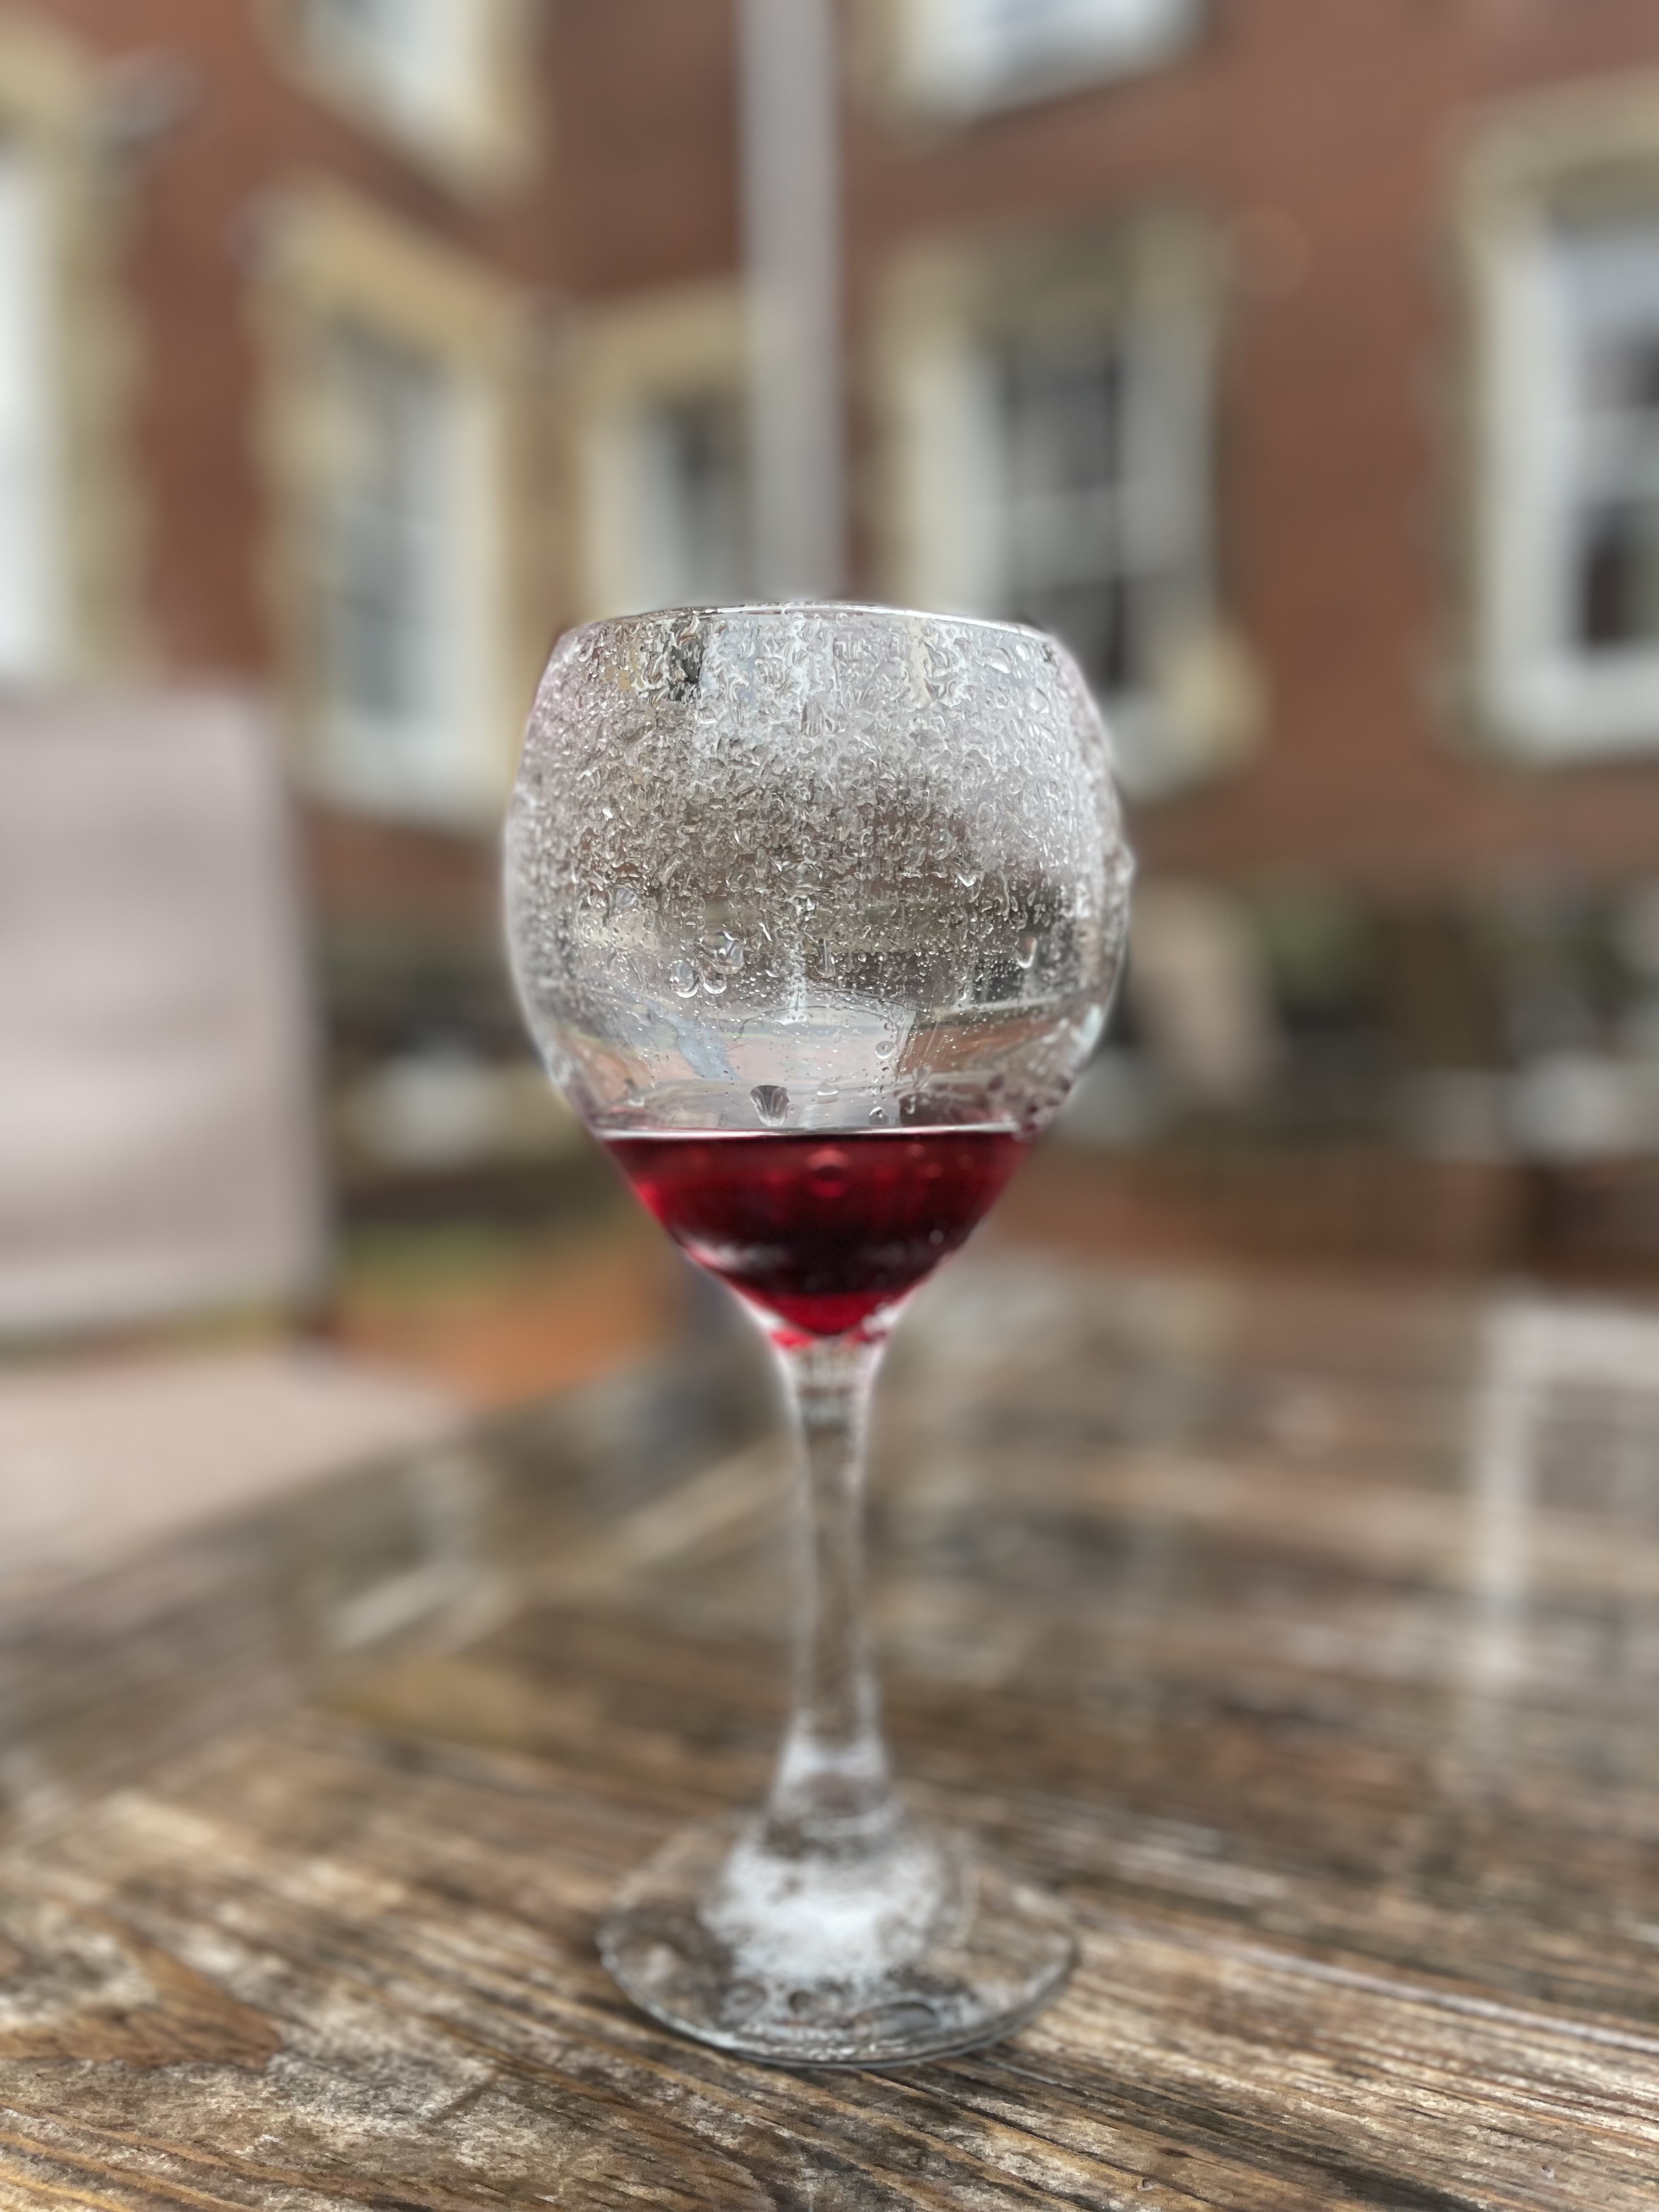 Wine glass with rain on it